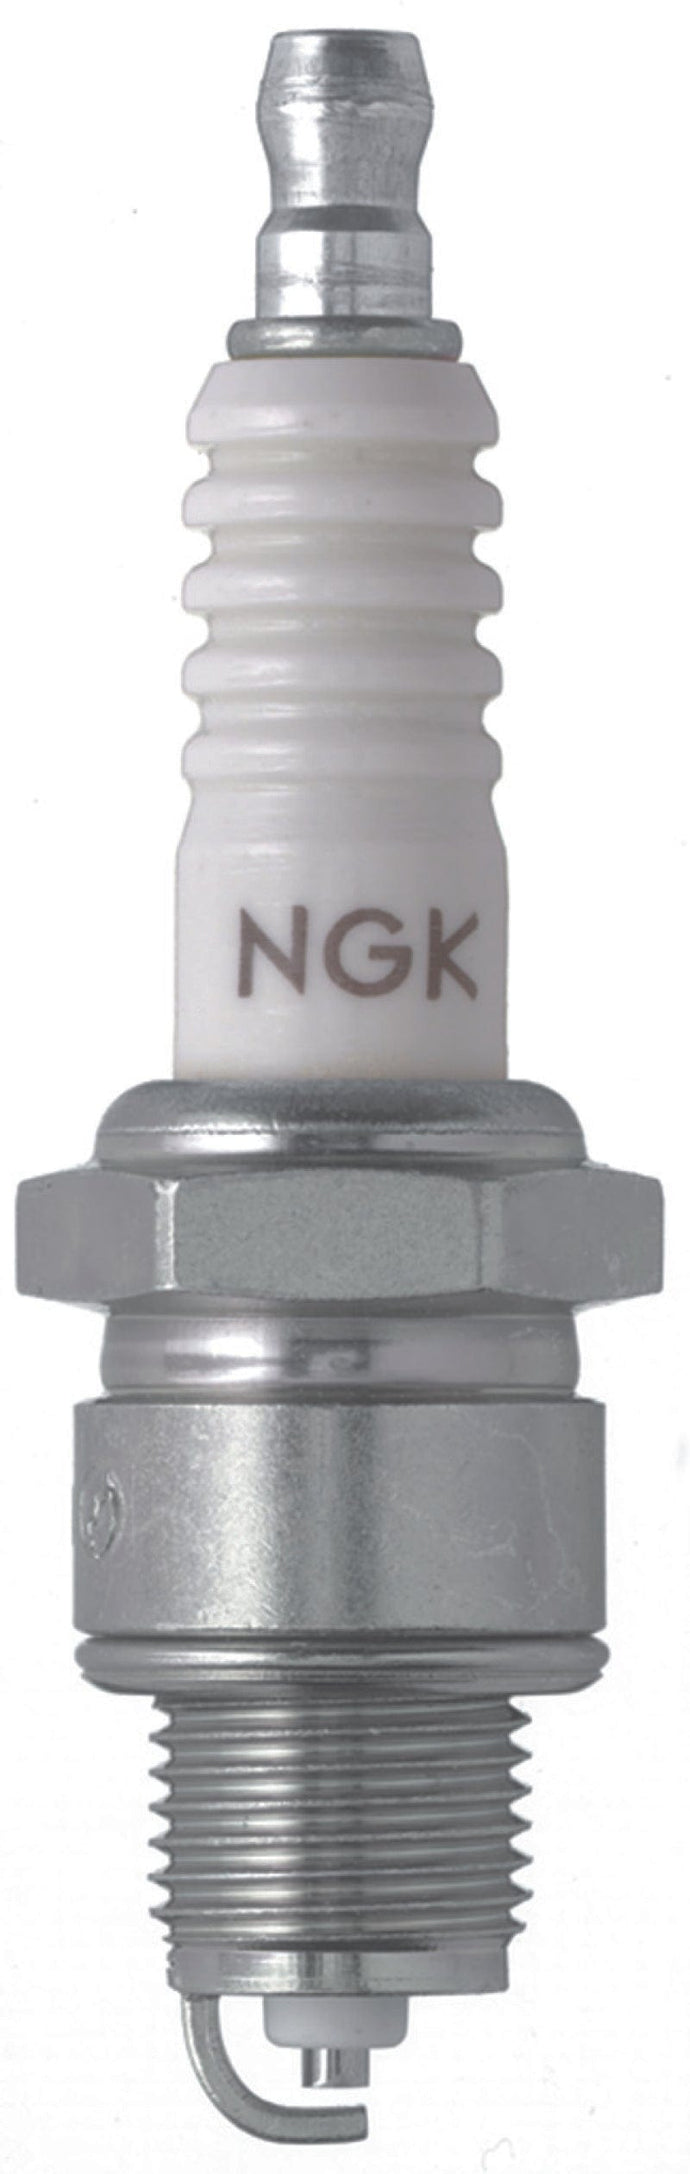 NGK NGK3823